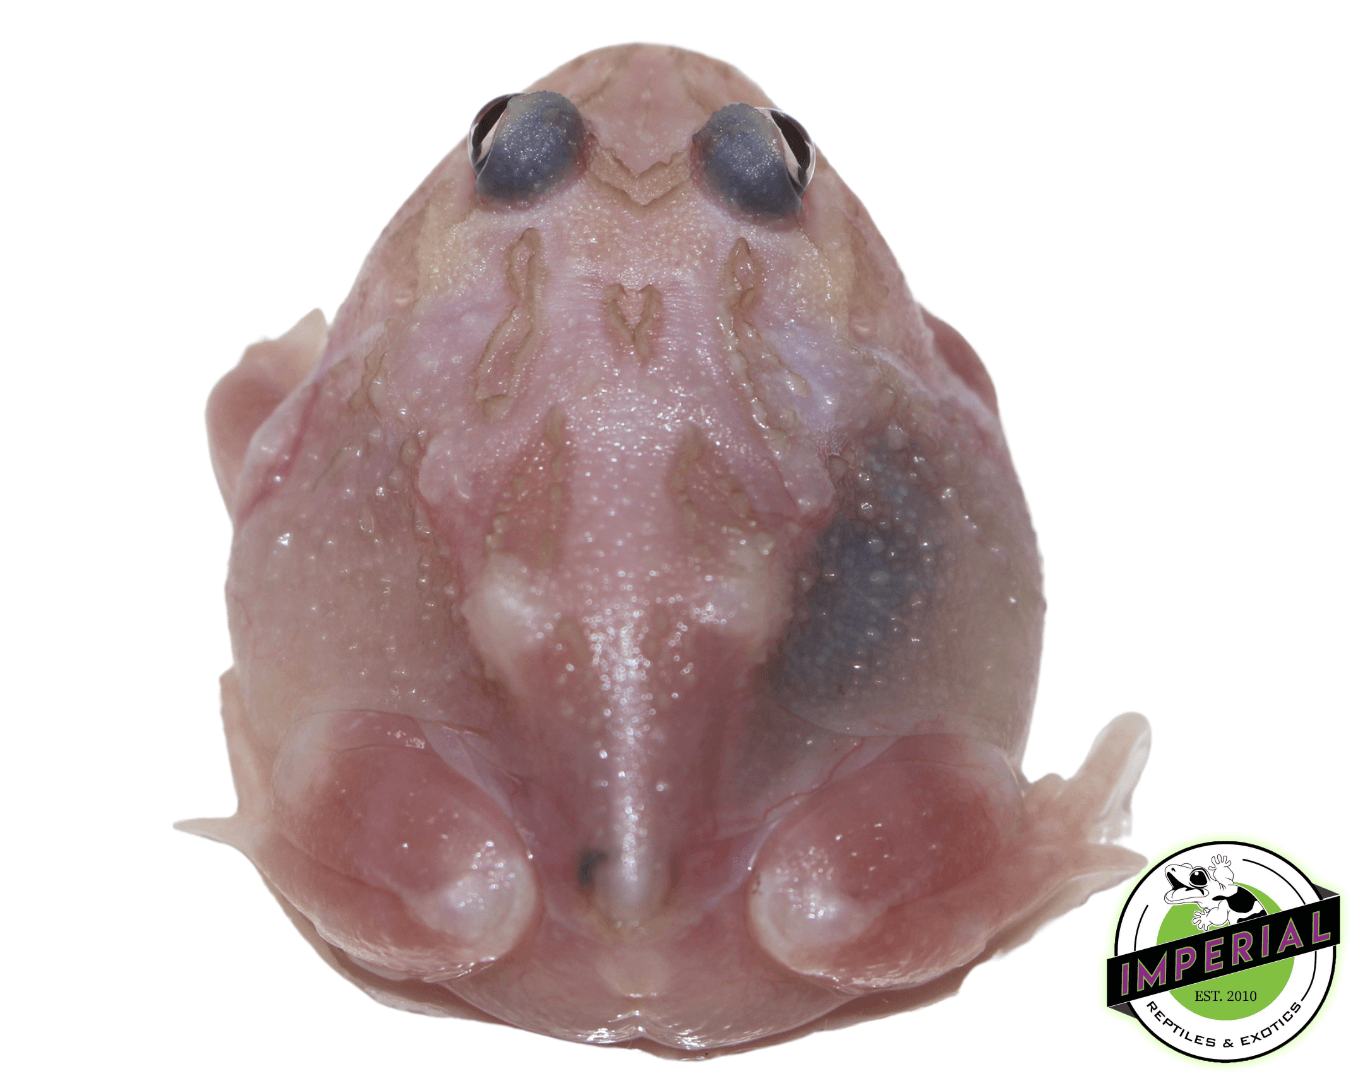 mutant pacman frog for sale, buy amphibians online